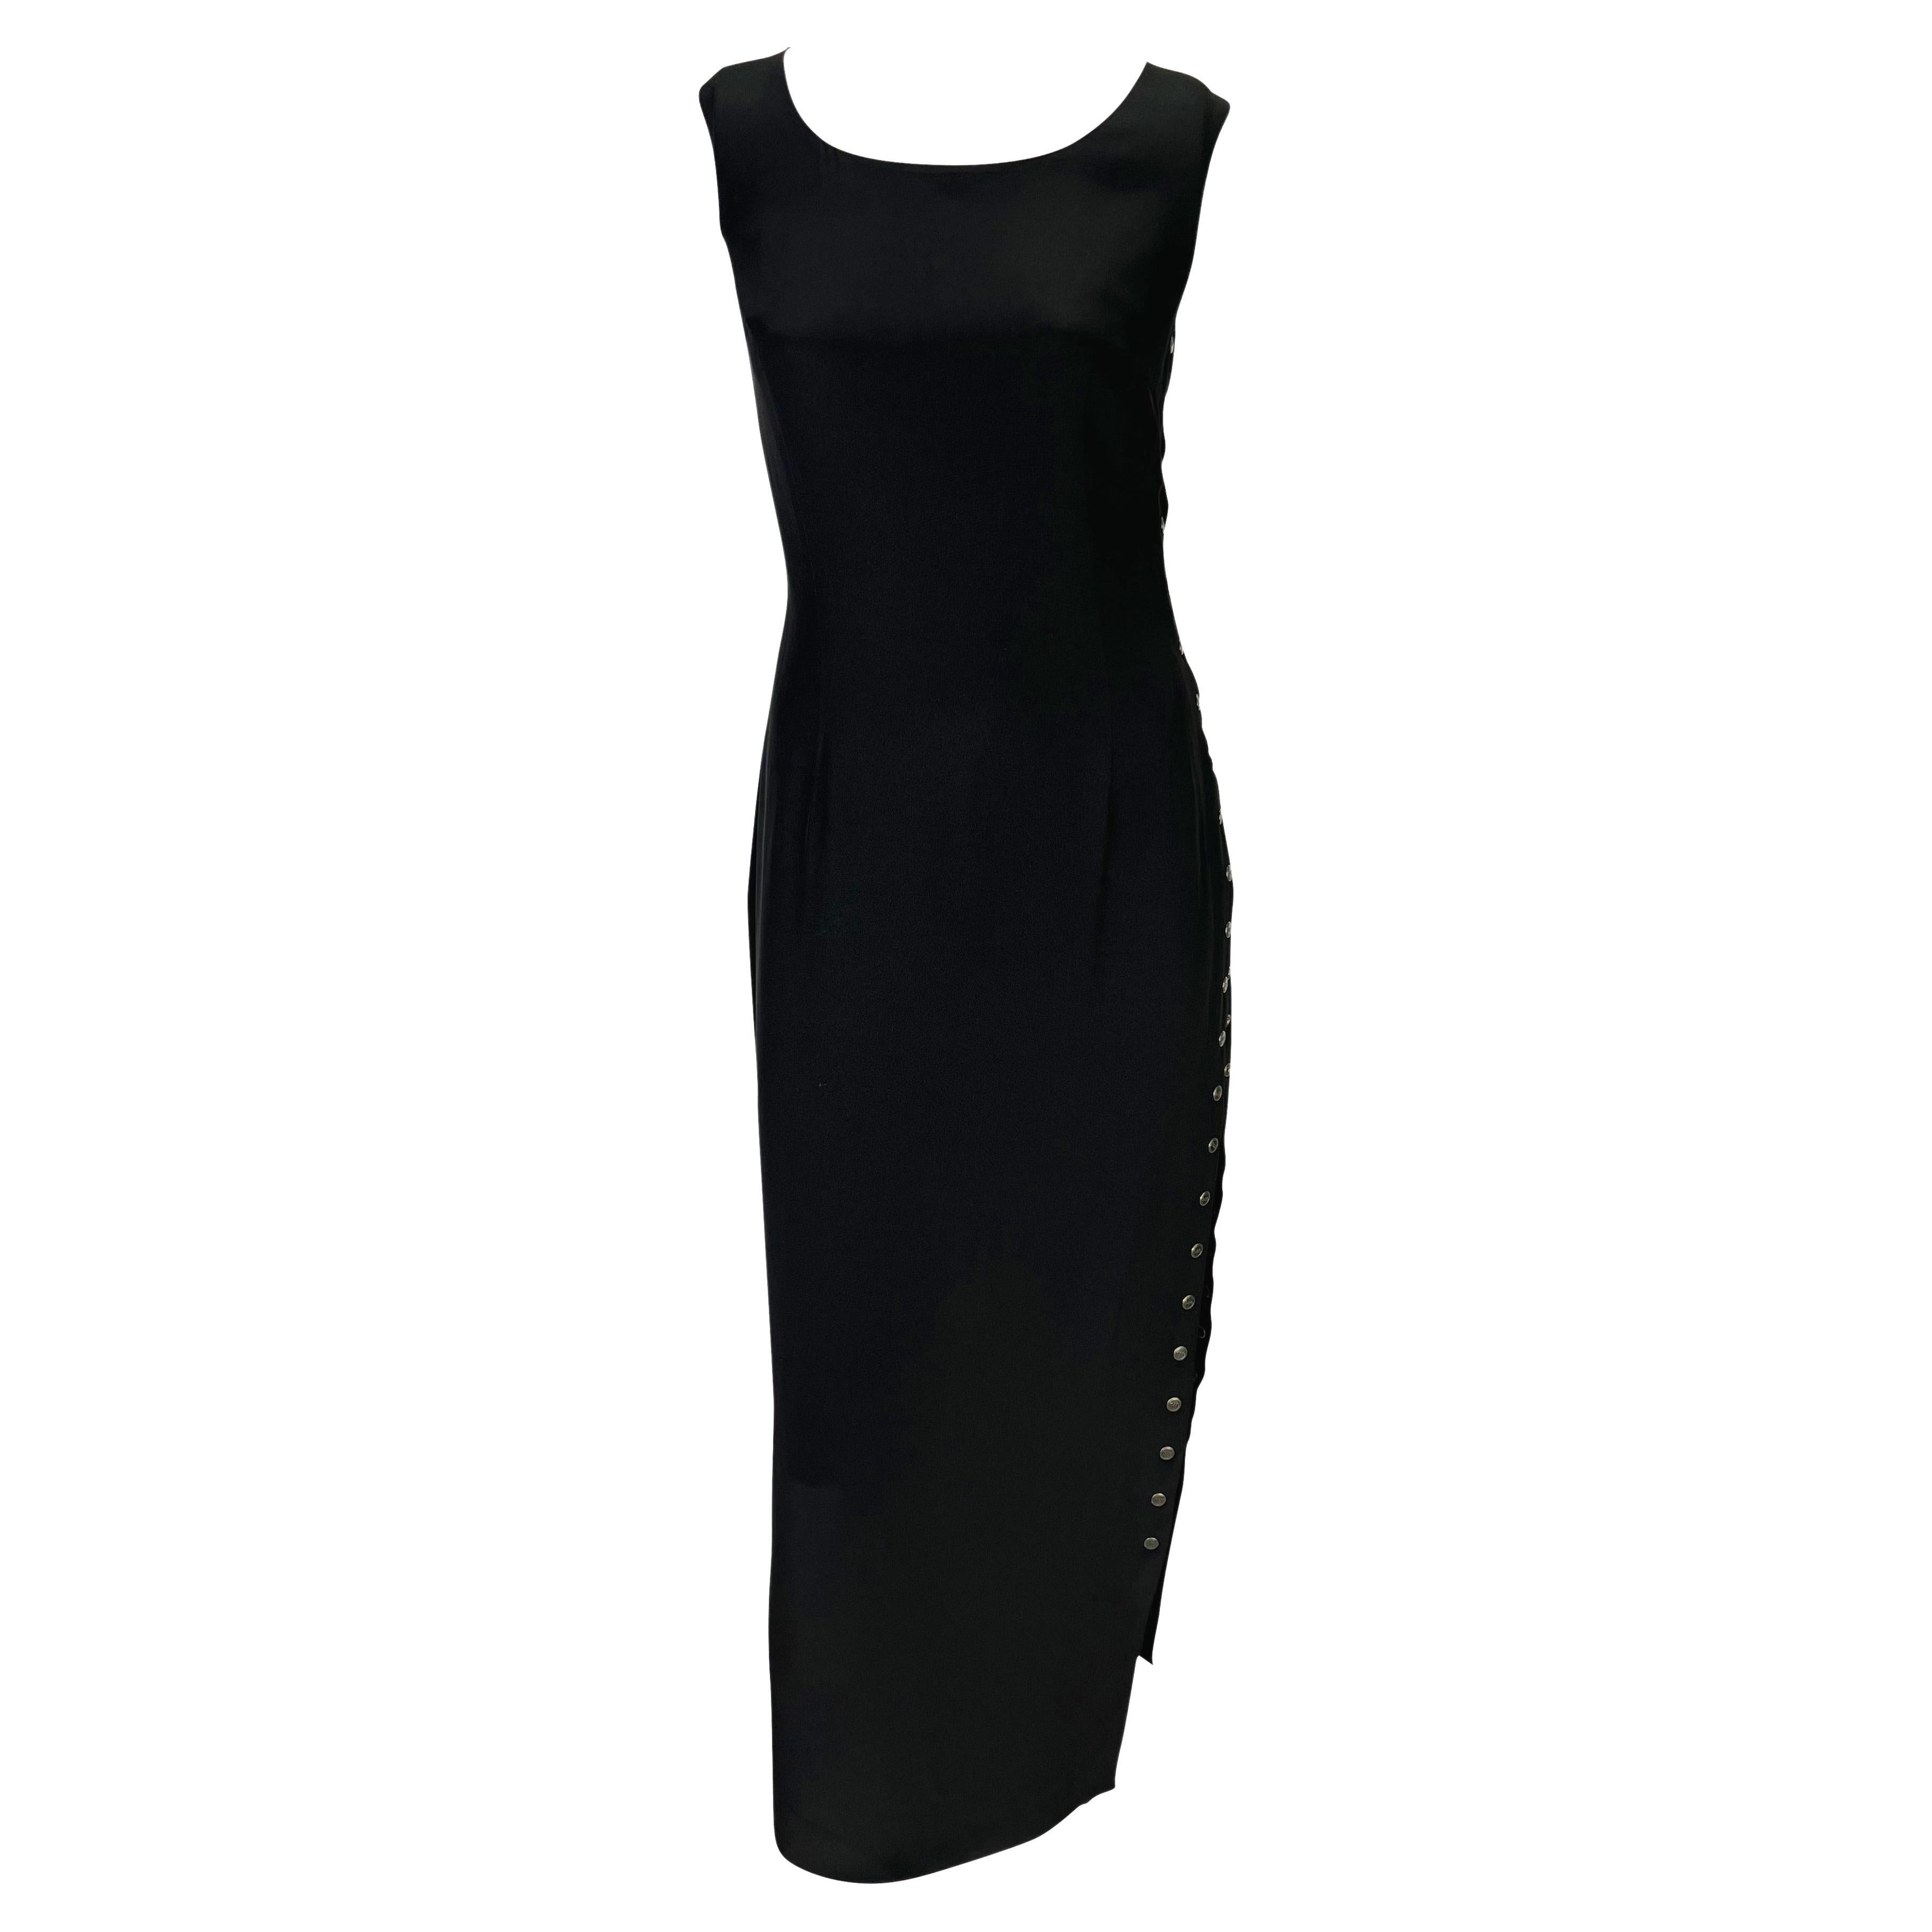 S/S 1993 Dolce & Gabbana Runway Logo Snap Black Bodycon Pin-Up Dress For Sale 1